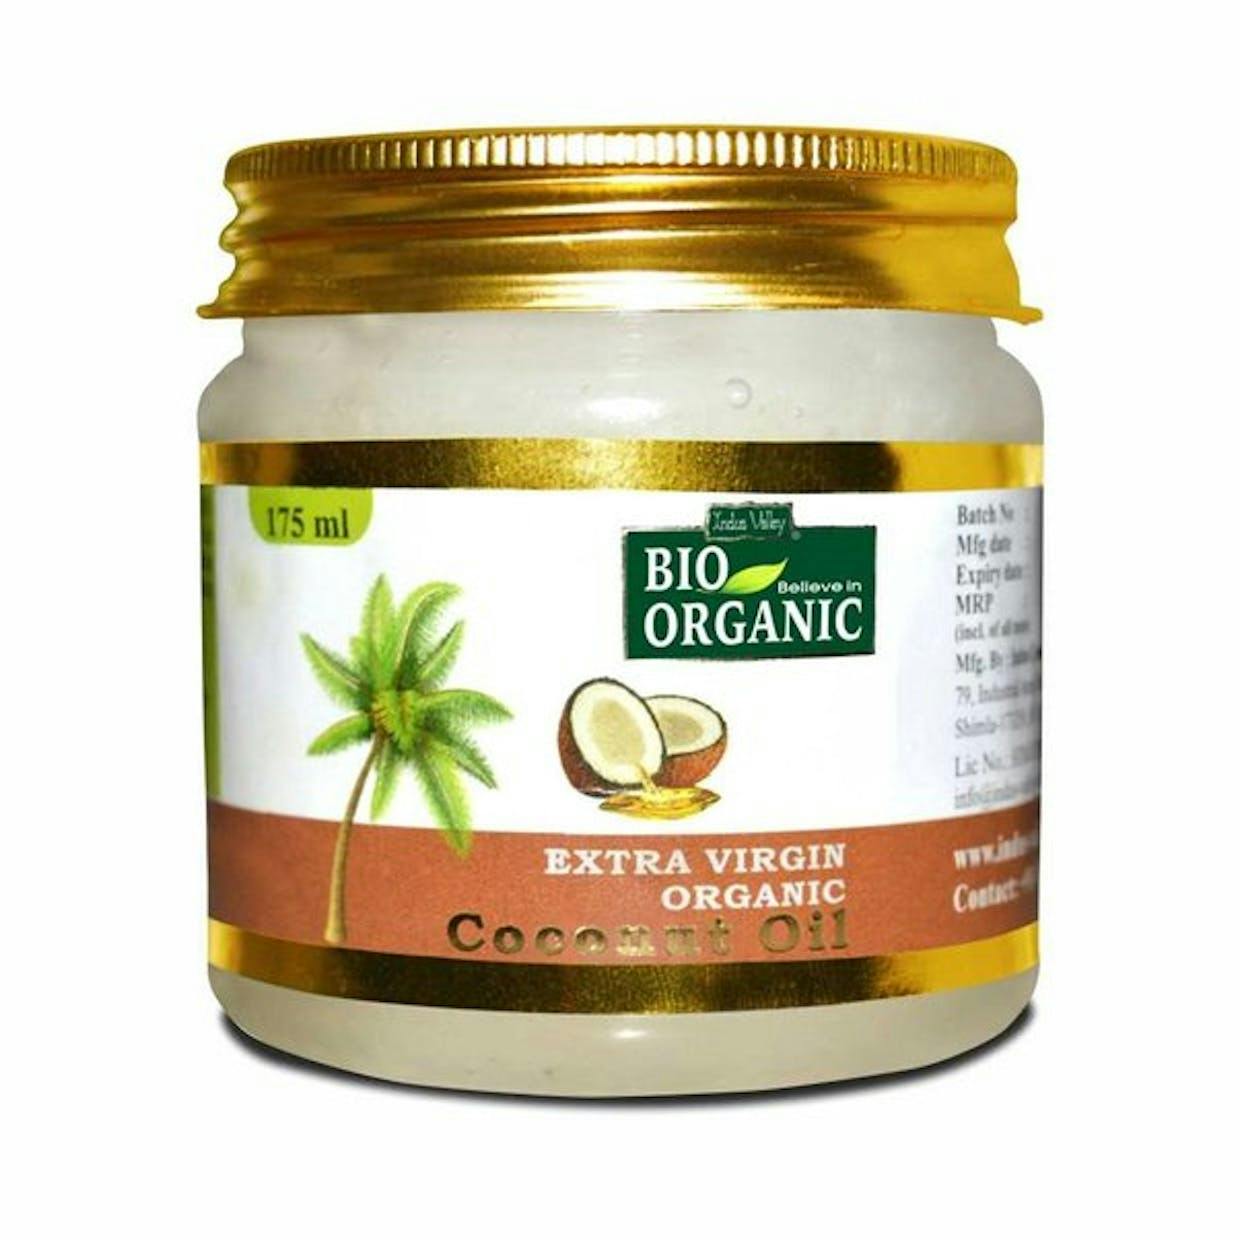 Is coconut oil good for sun-damaged skin?